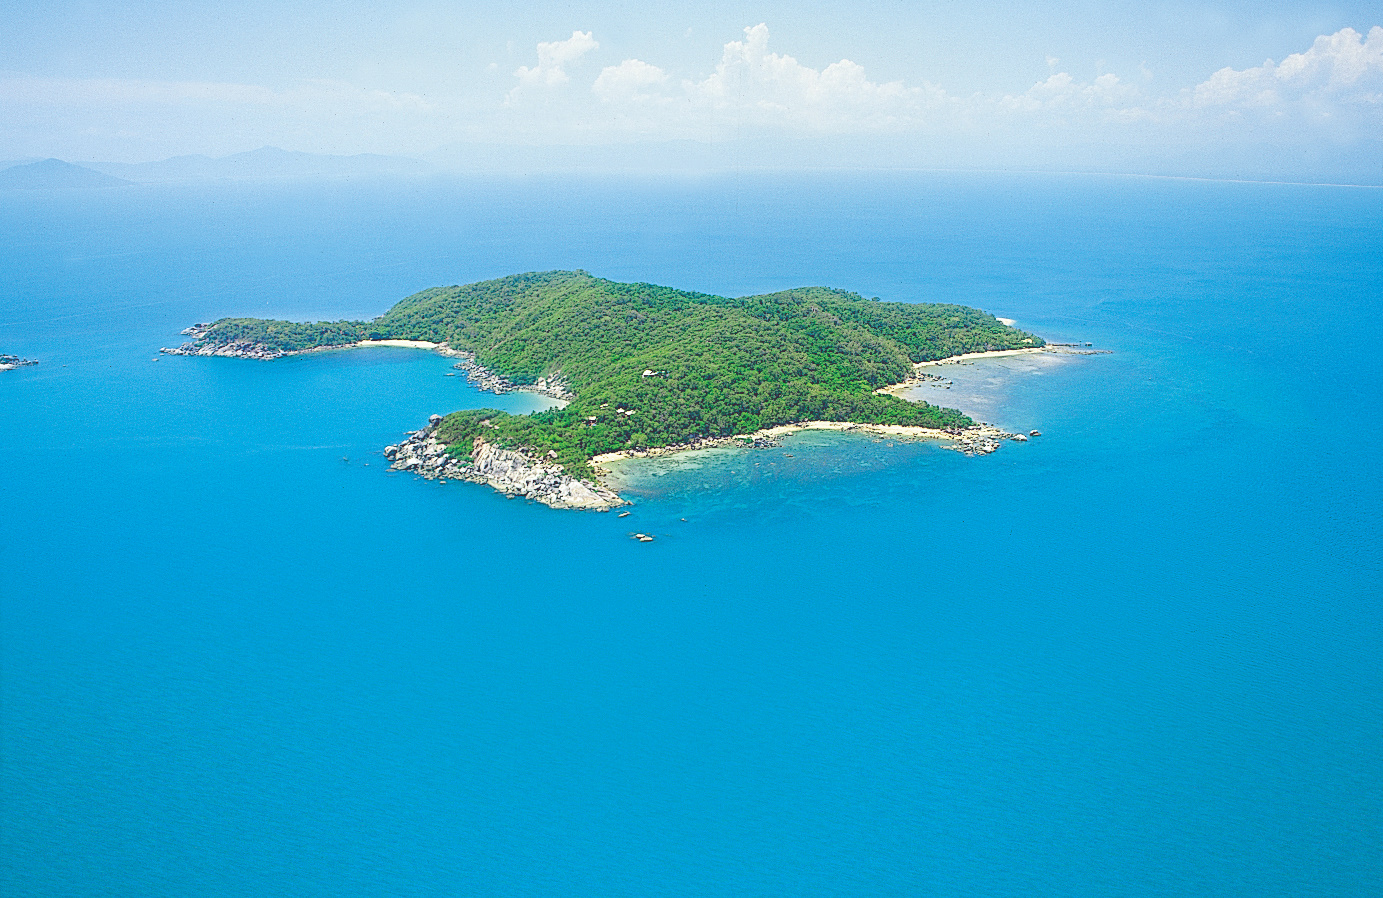 World's most famous beach destination, Boracay island reopens 